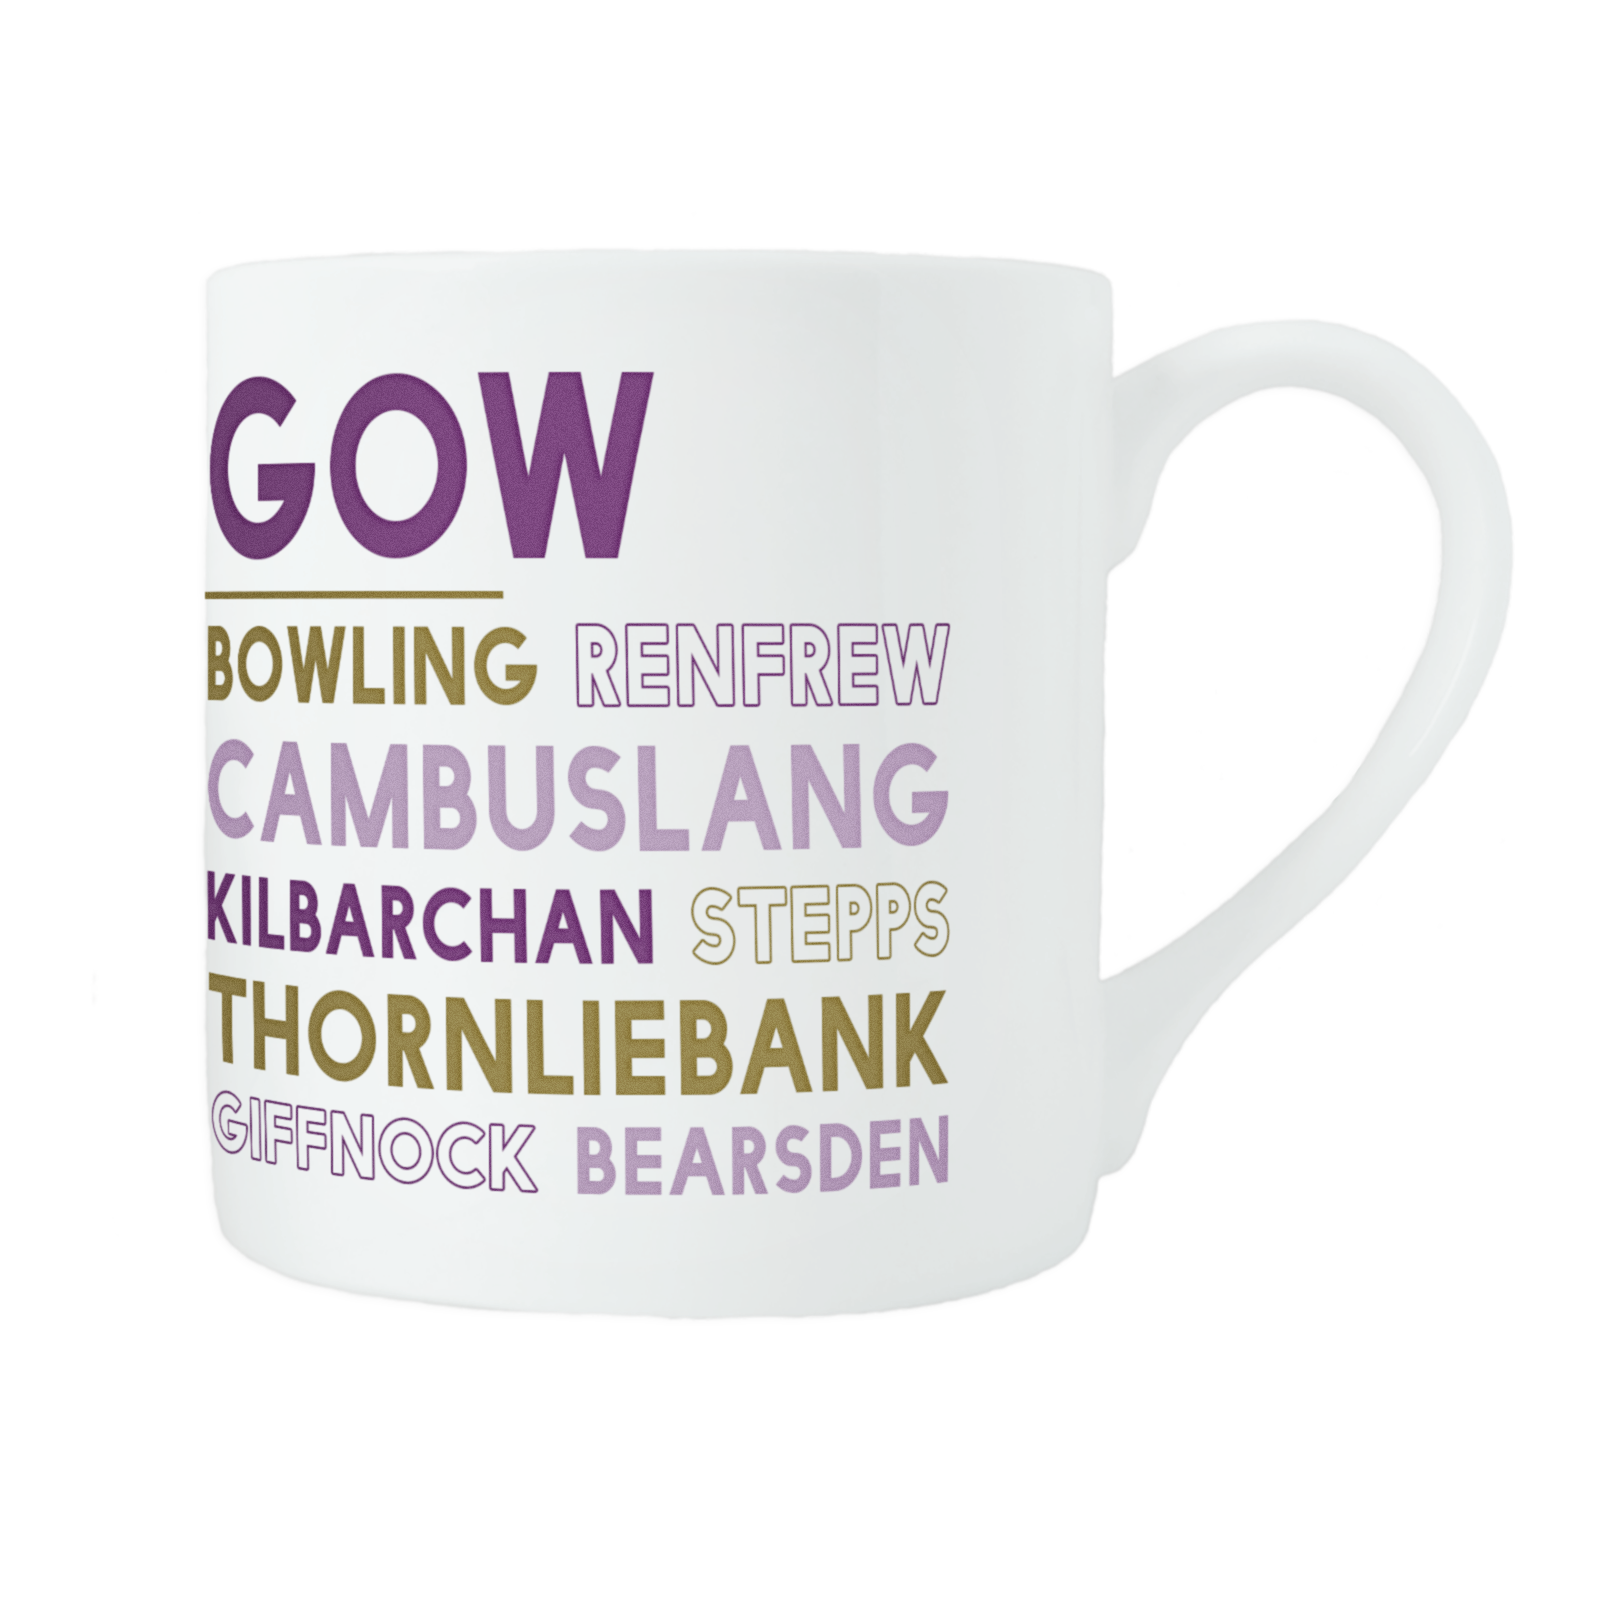 Glasgow bone china mug